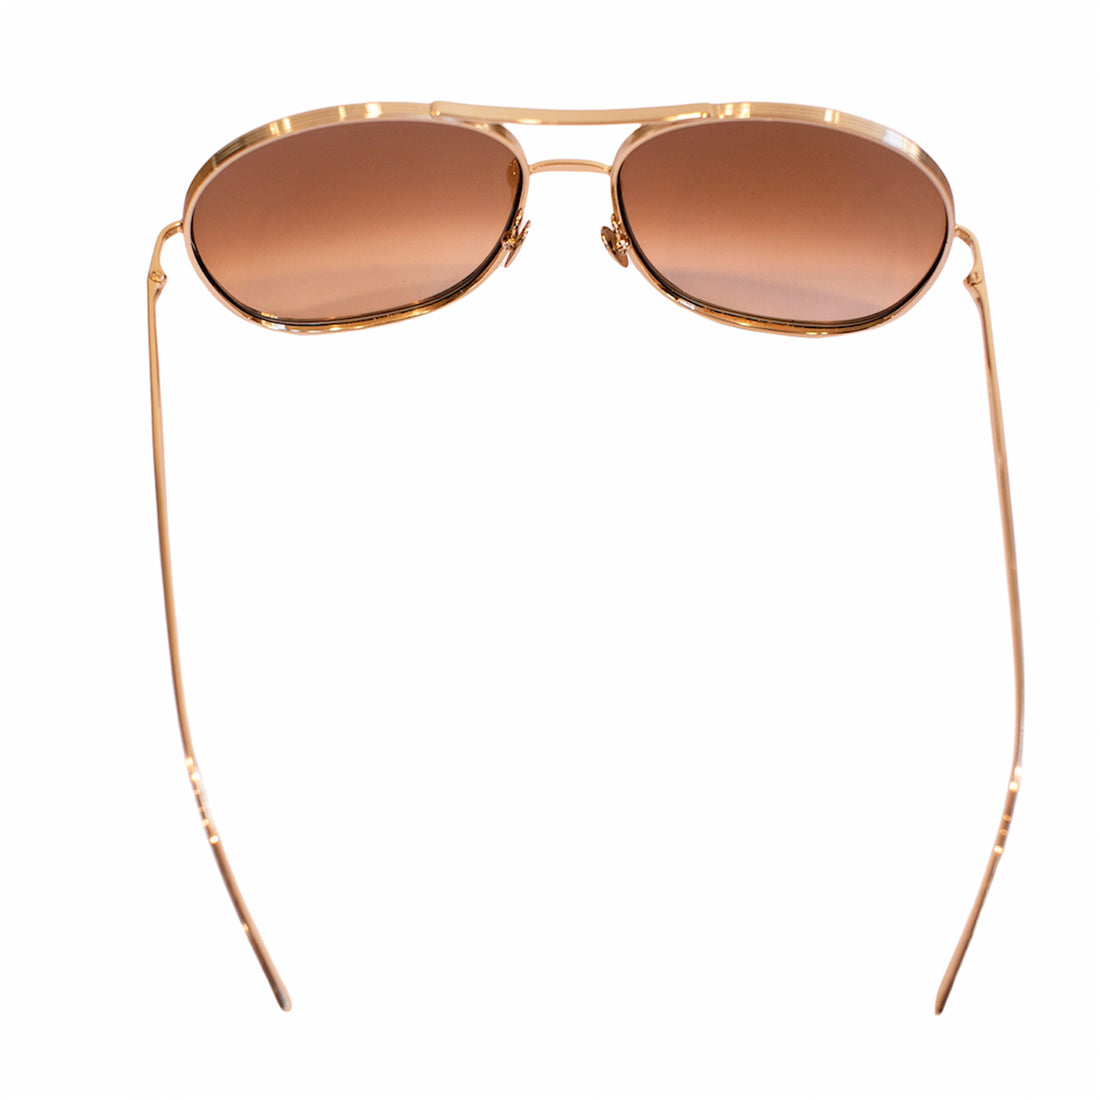 Chloé oversized sunglasses